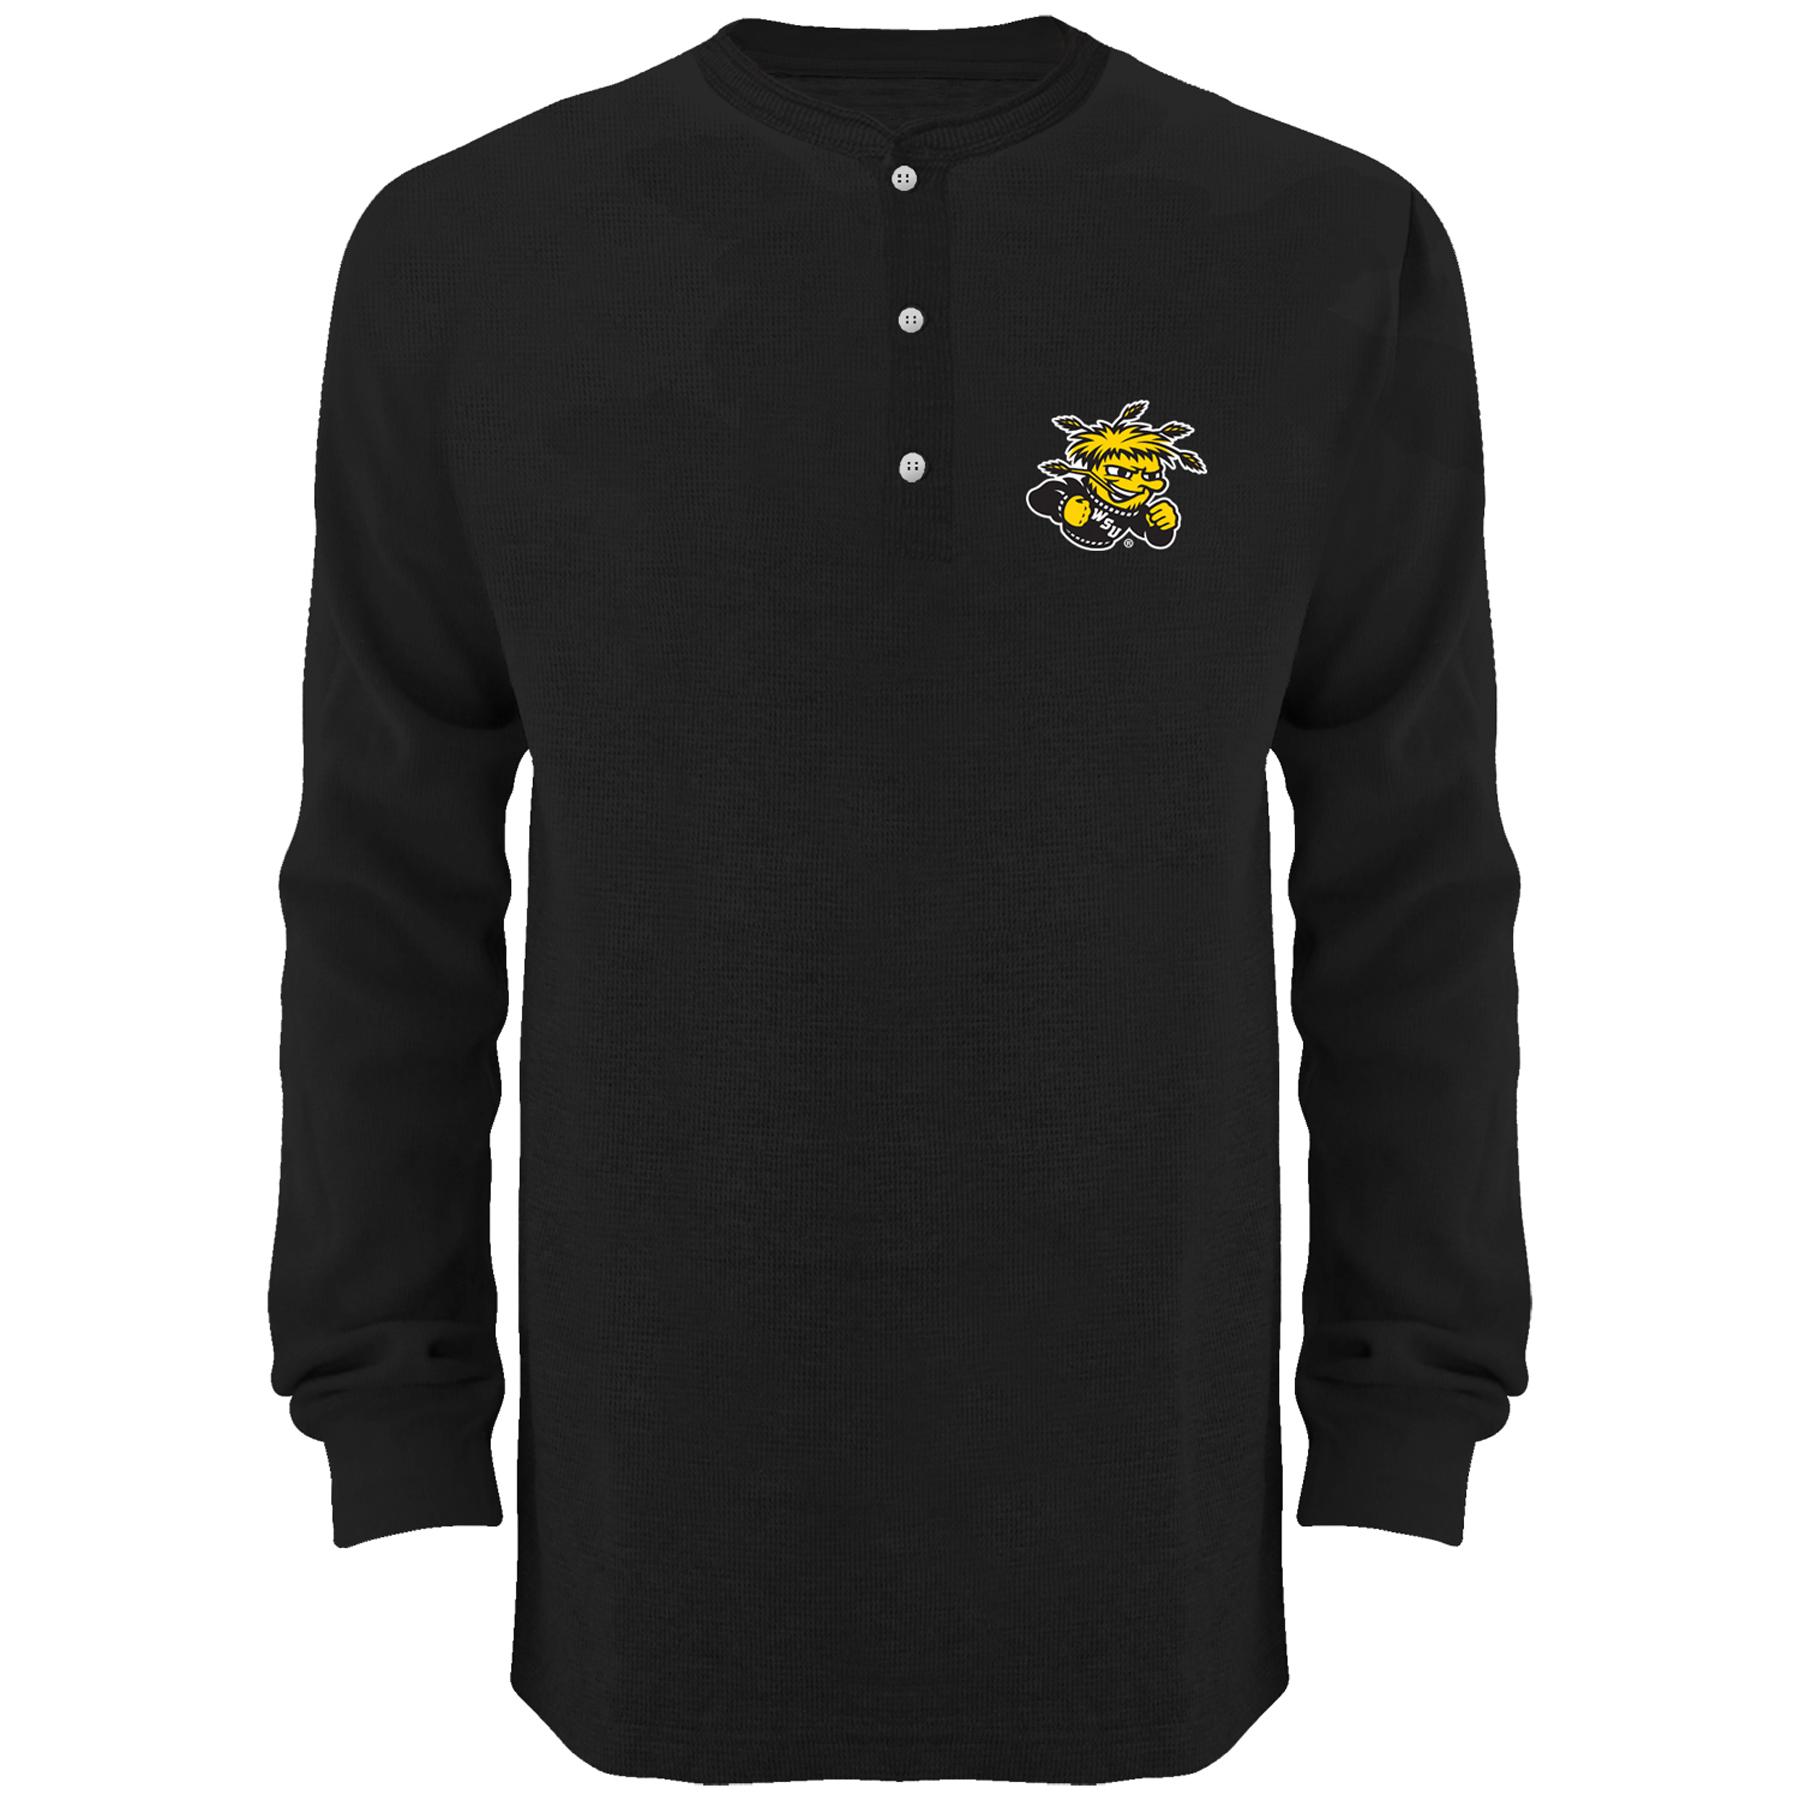 NCAA Men's Henley Shirt - Wichita State University Shockers